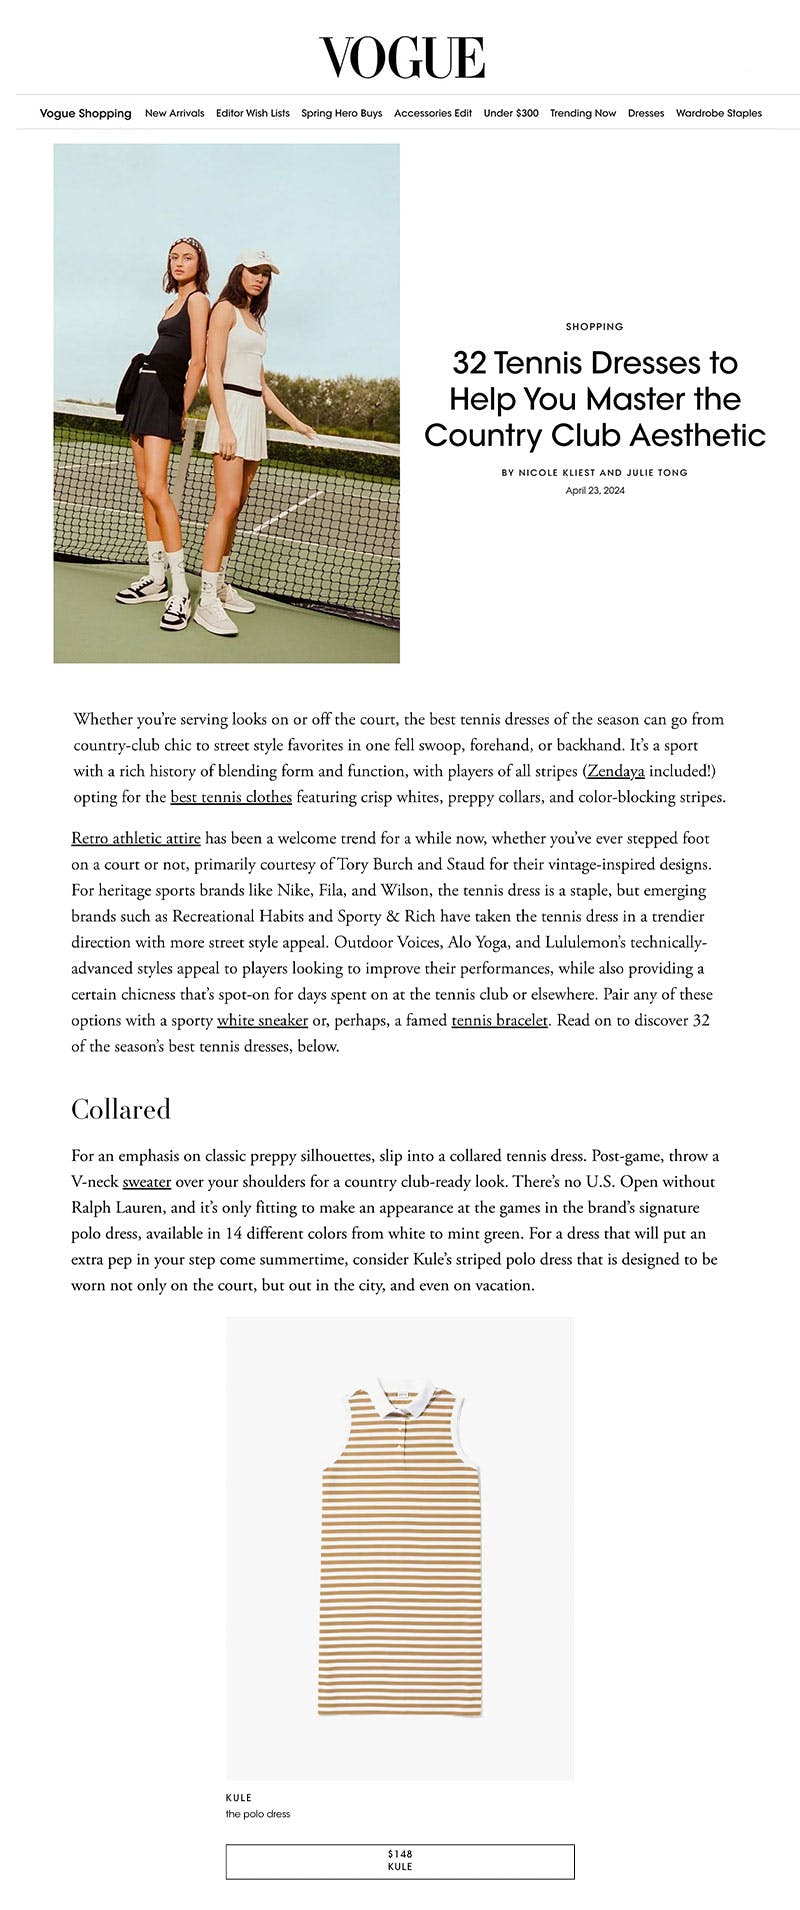 Vogue featuring KULE striped polo dress as best tennis dress